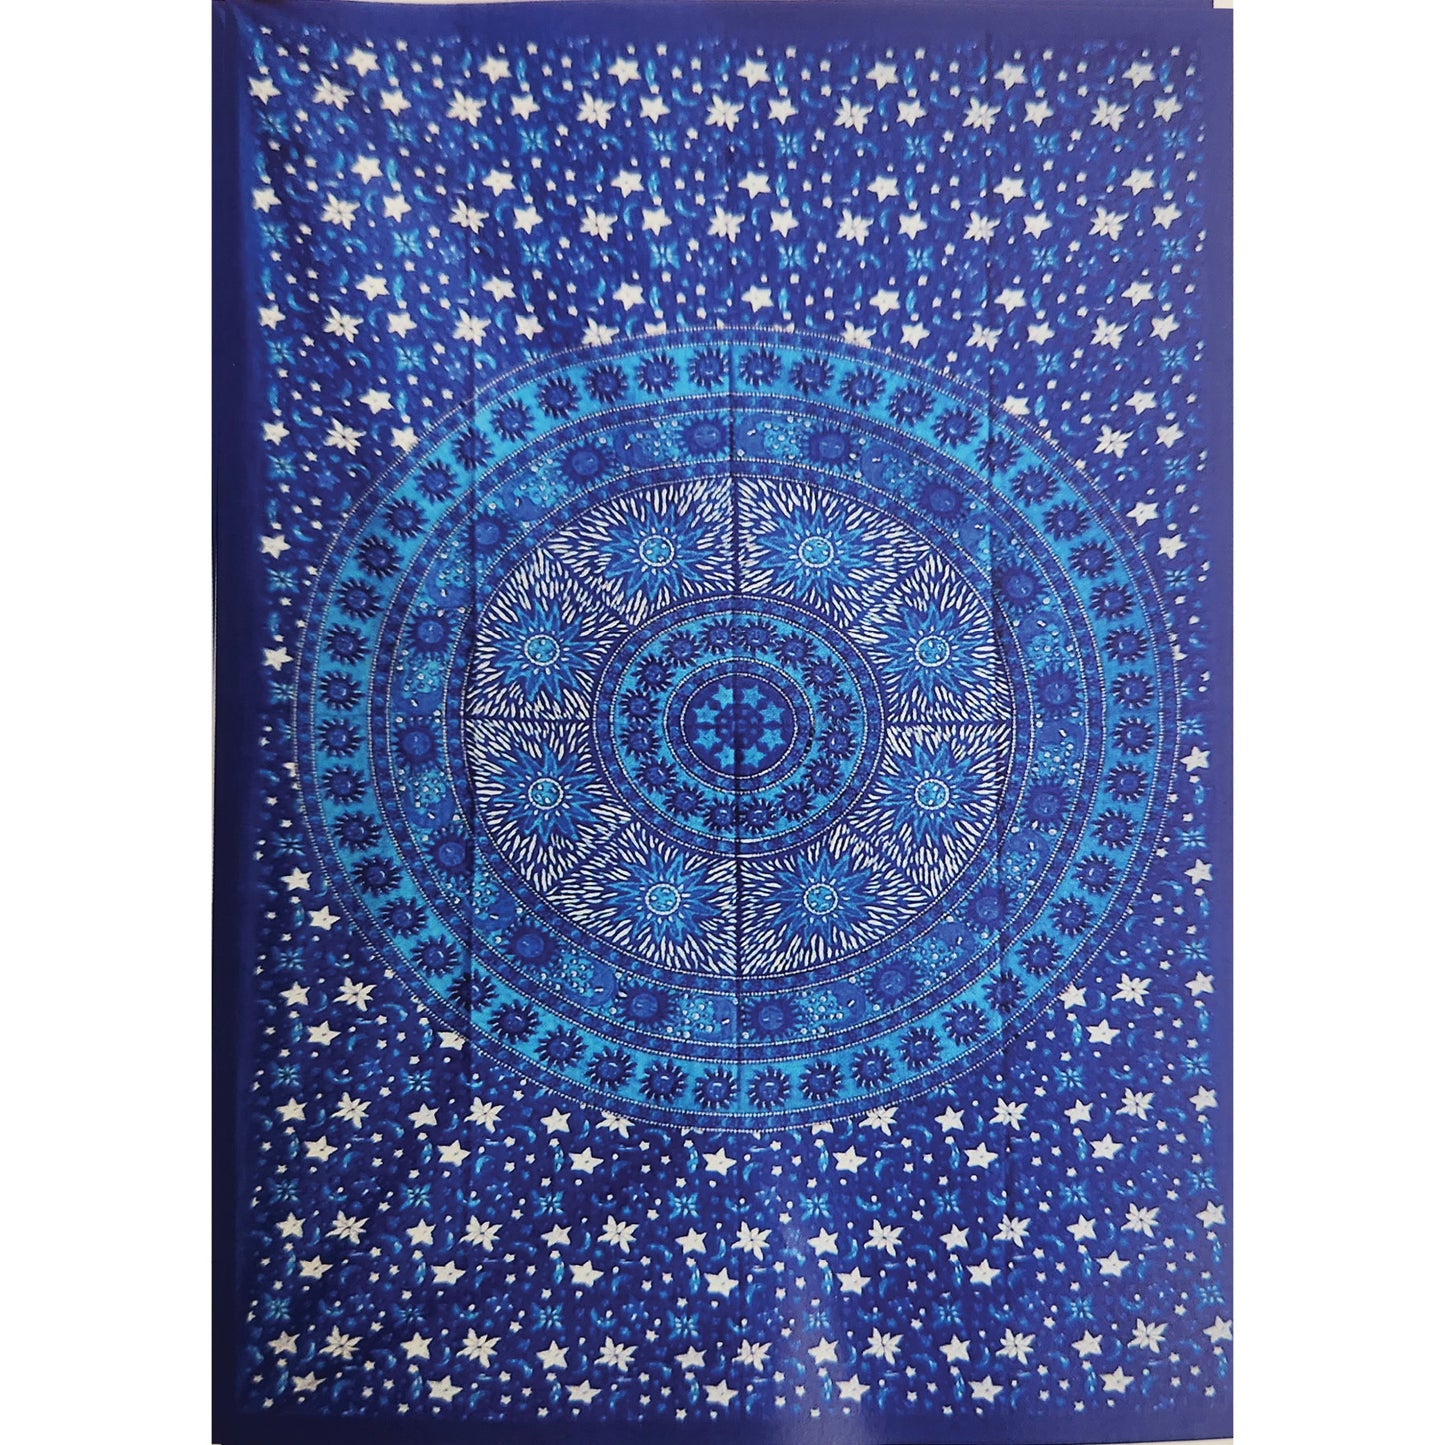 Sun Stars Mandala Galaxy Tapestry